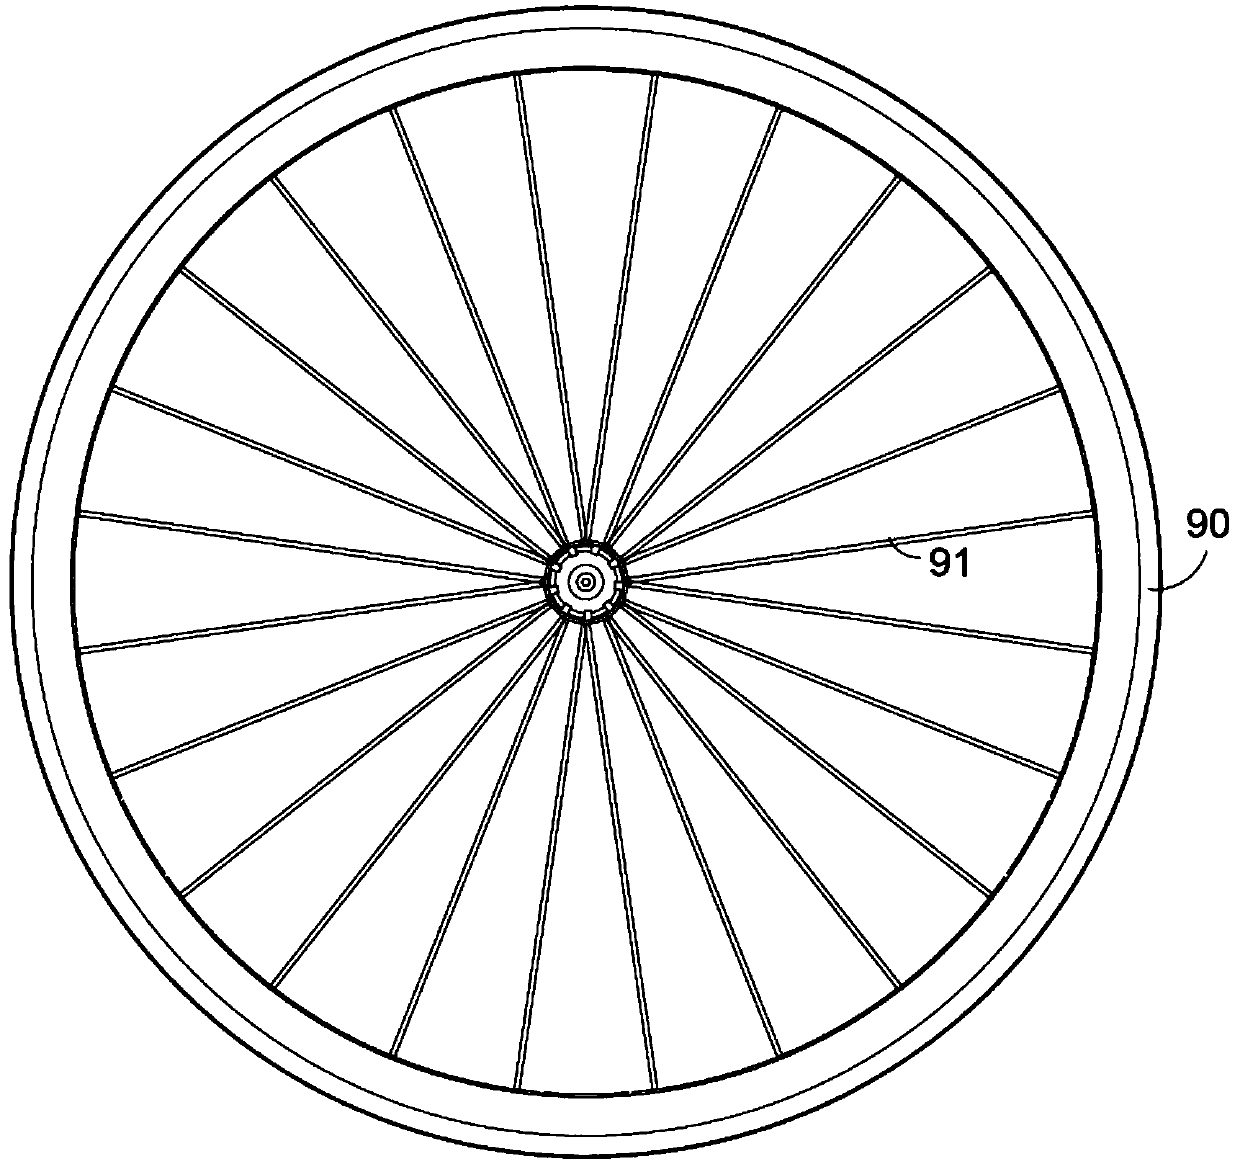 Bicycle wheel group